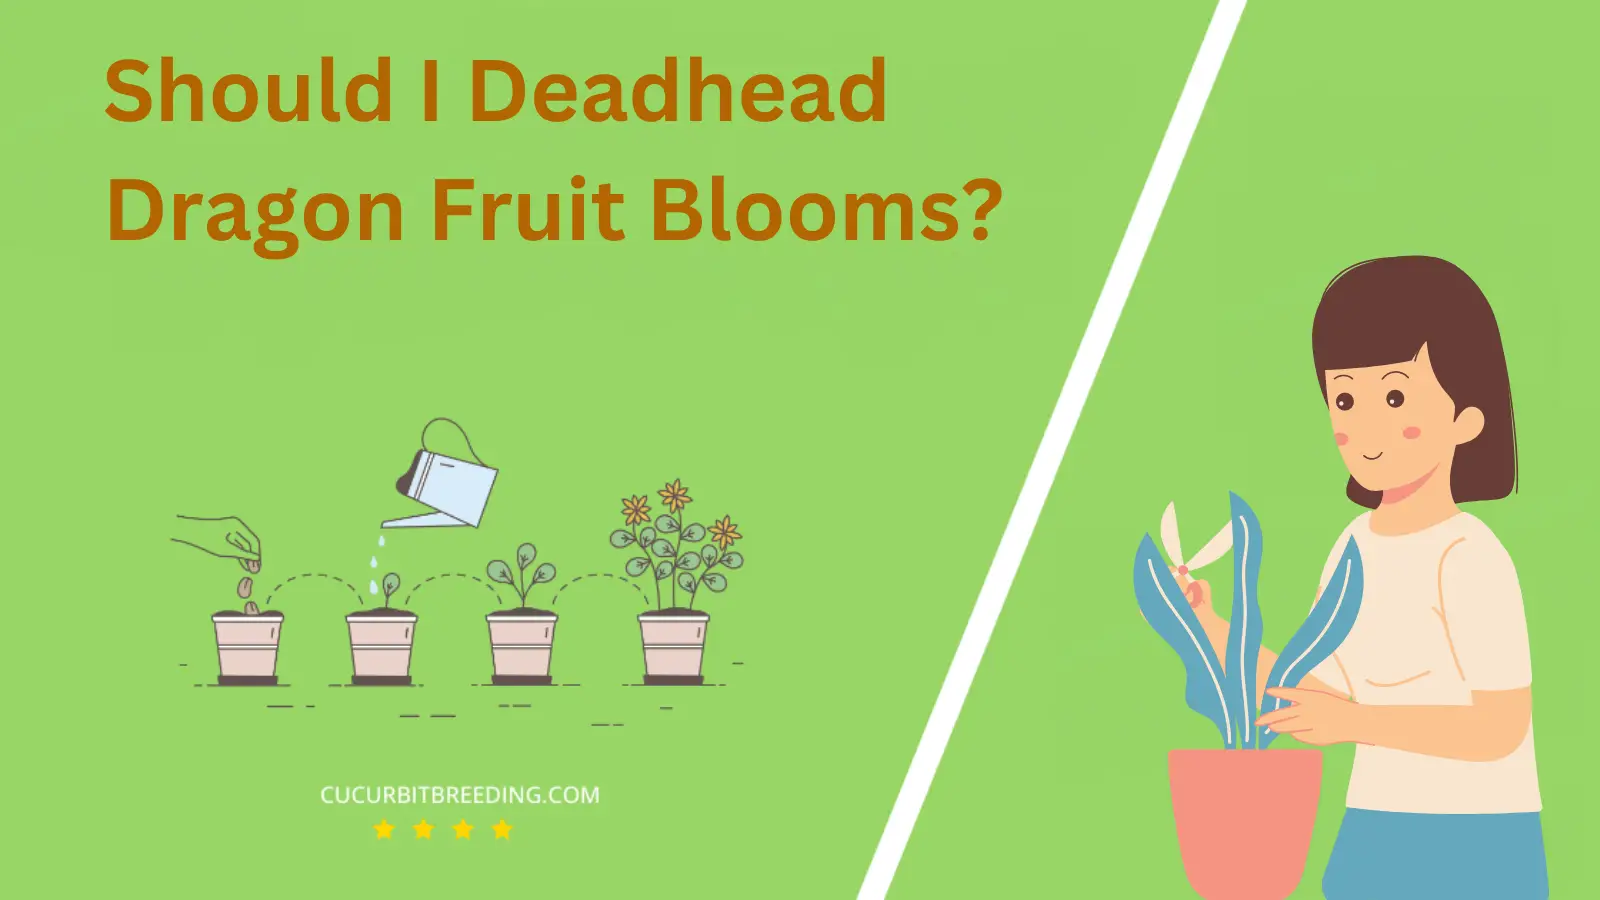 Should I Deadhead Dragon Fruit Blooms?